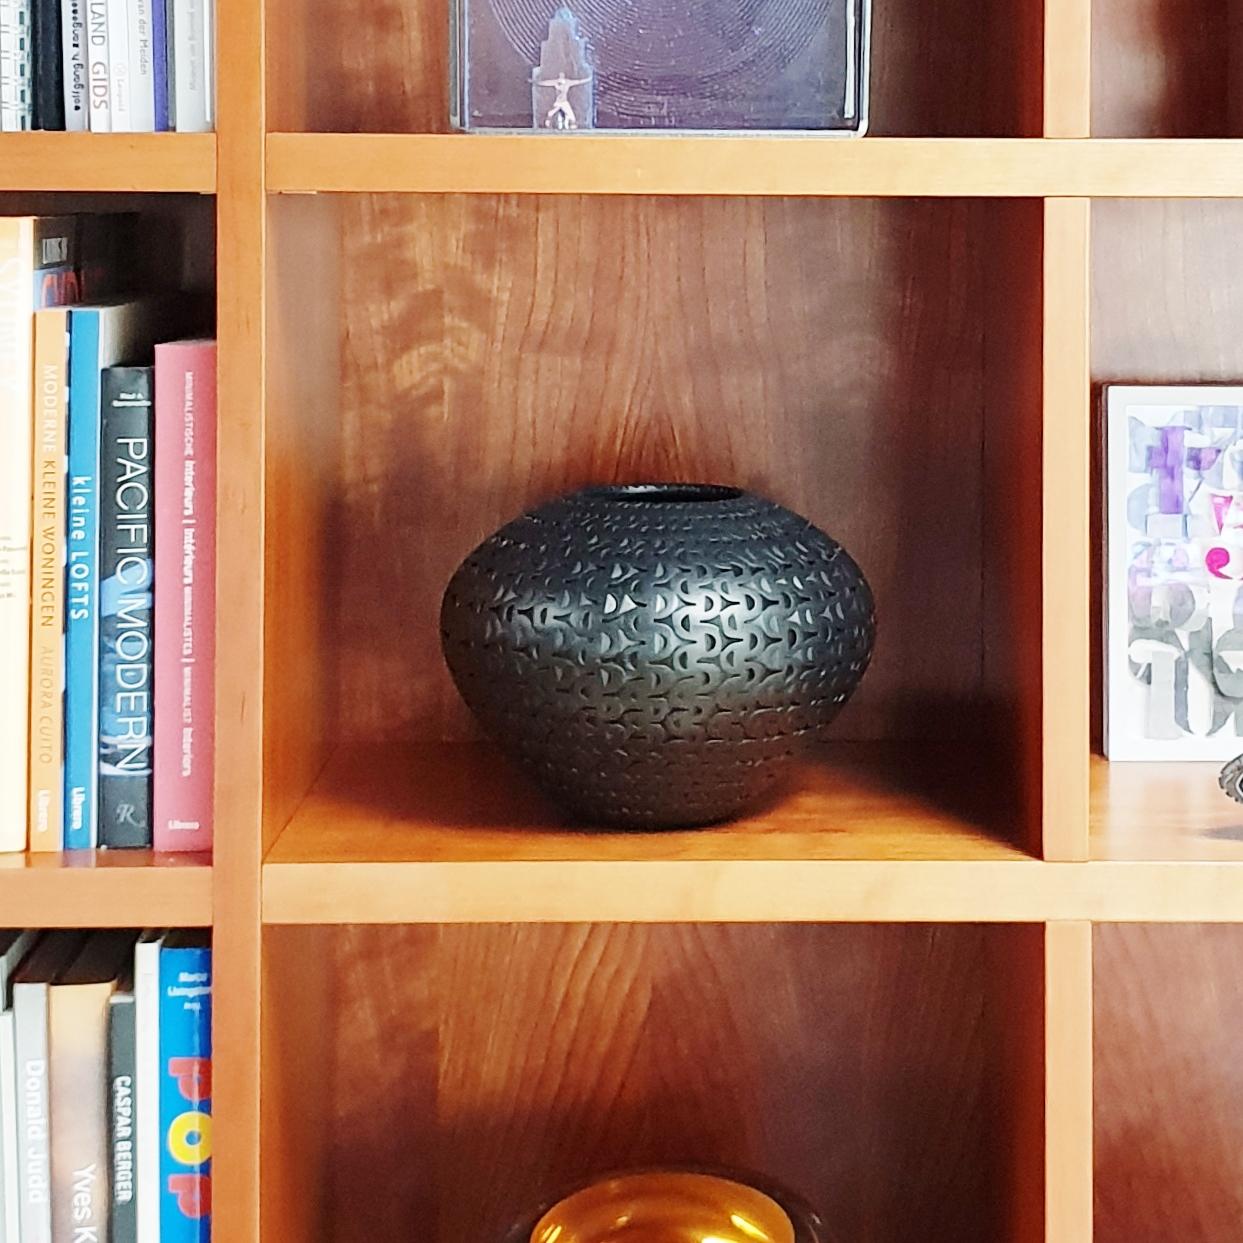 Black Buckle Vessel - contemporary modern abstract geometric ceramic vase vessel - Contemporary Art by Michael Wisner